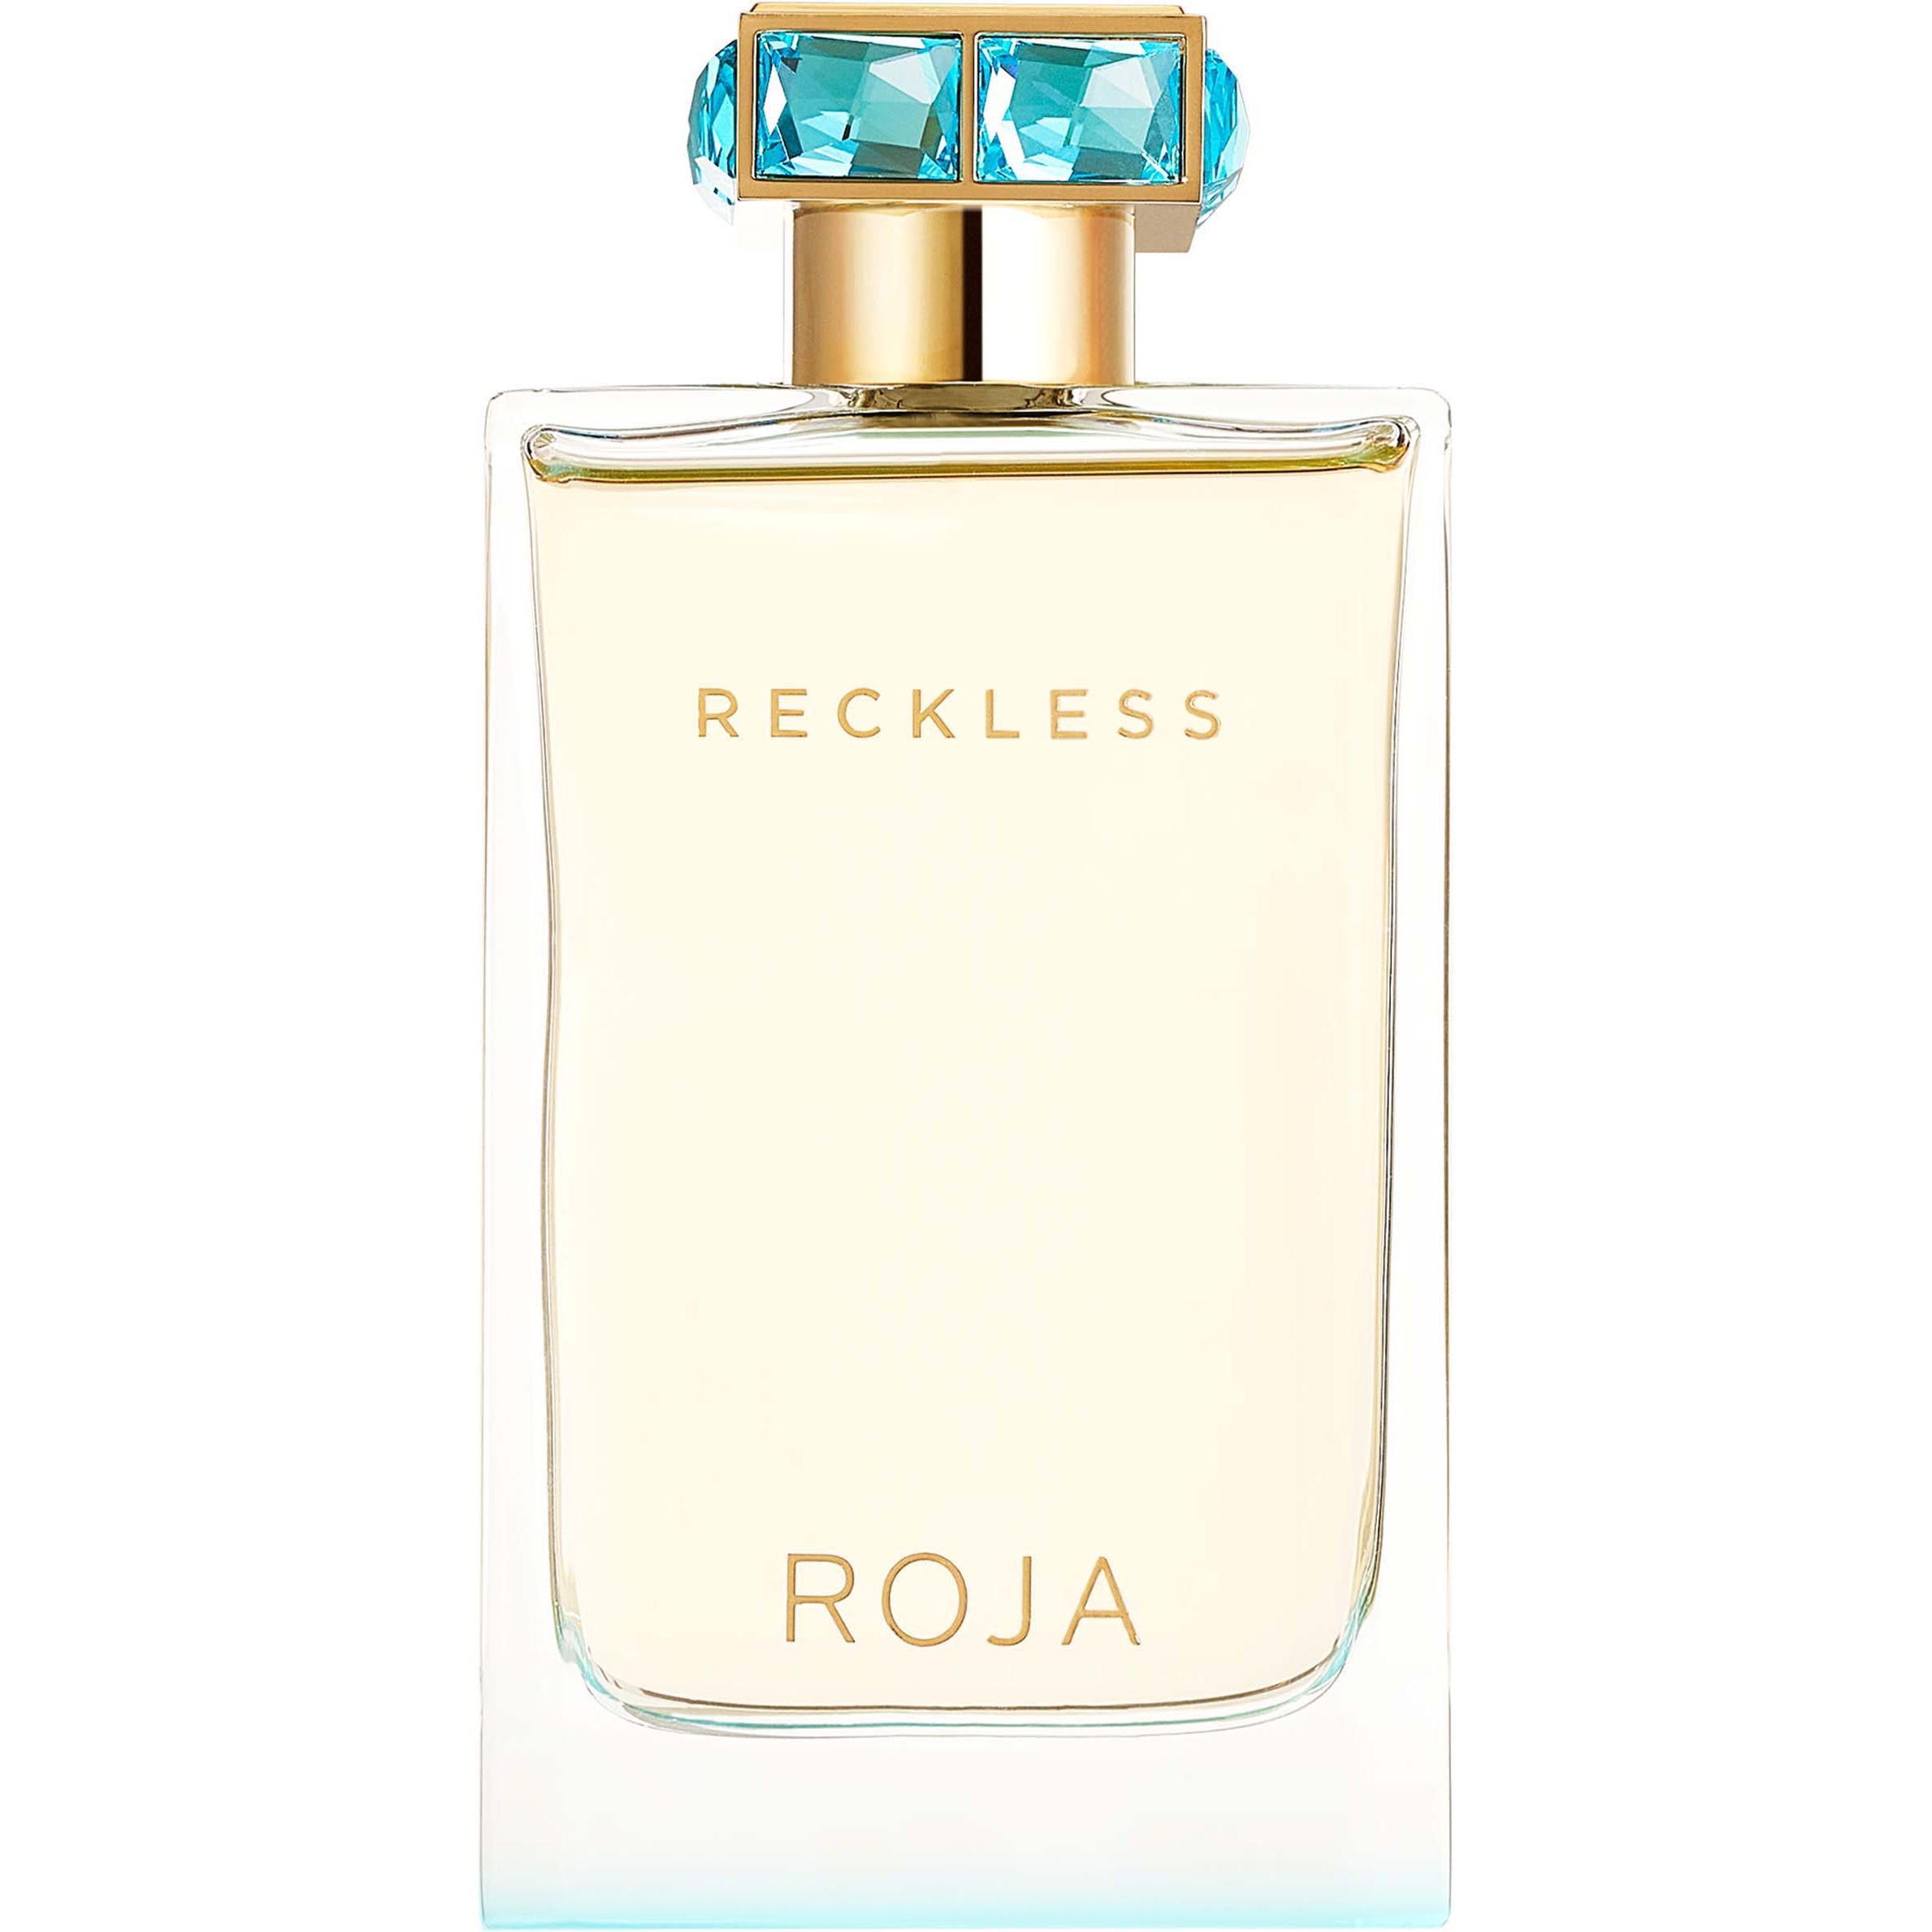 Фото - Жіночі парфуми Roja Parfums Reckless Essence de Parfum 75 ml 